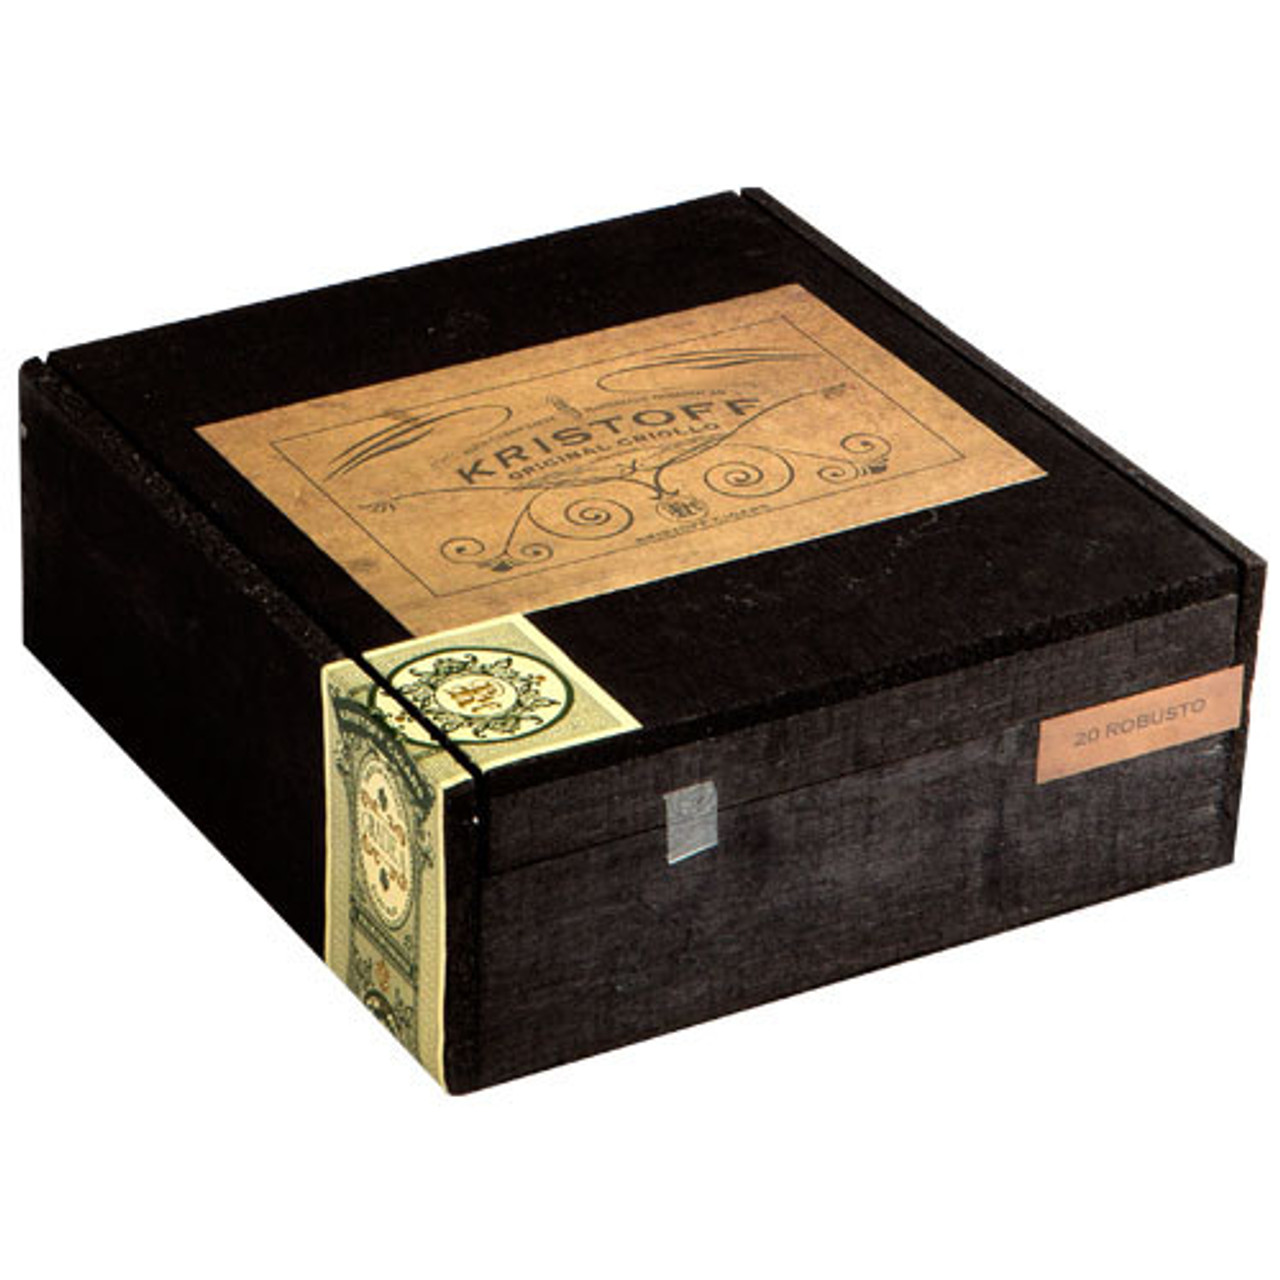 Kristoff Original Criollo Matador Cigars - 6.5 x 56 (Box of 20) *Box